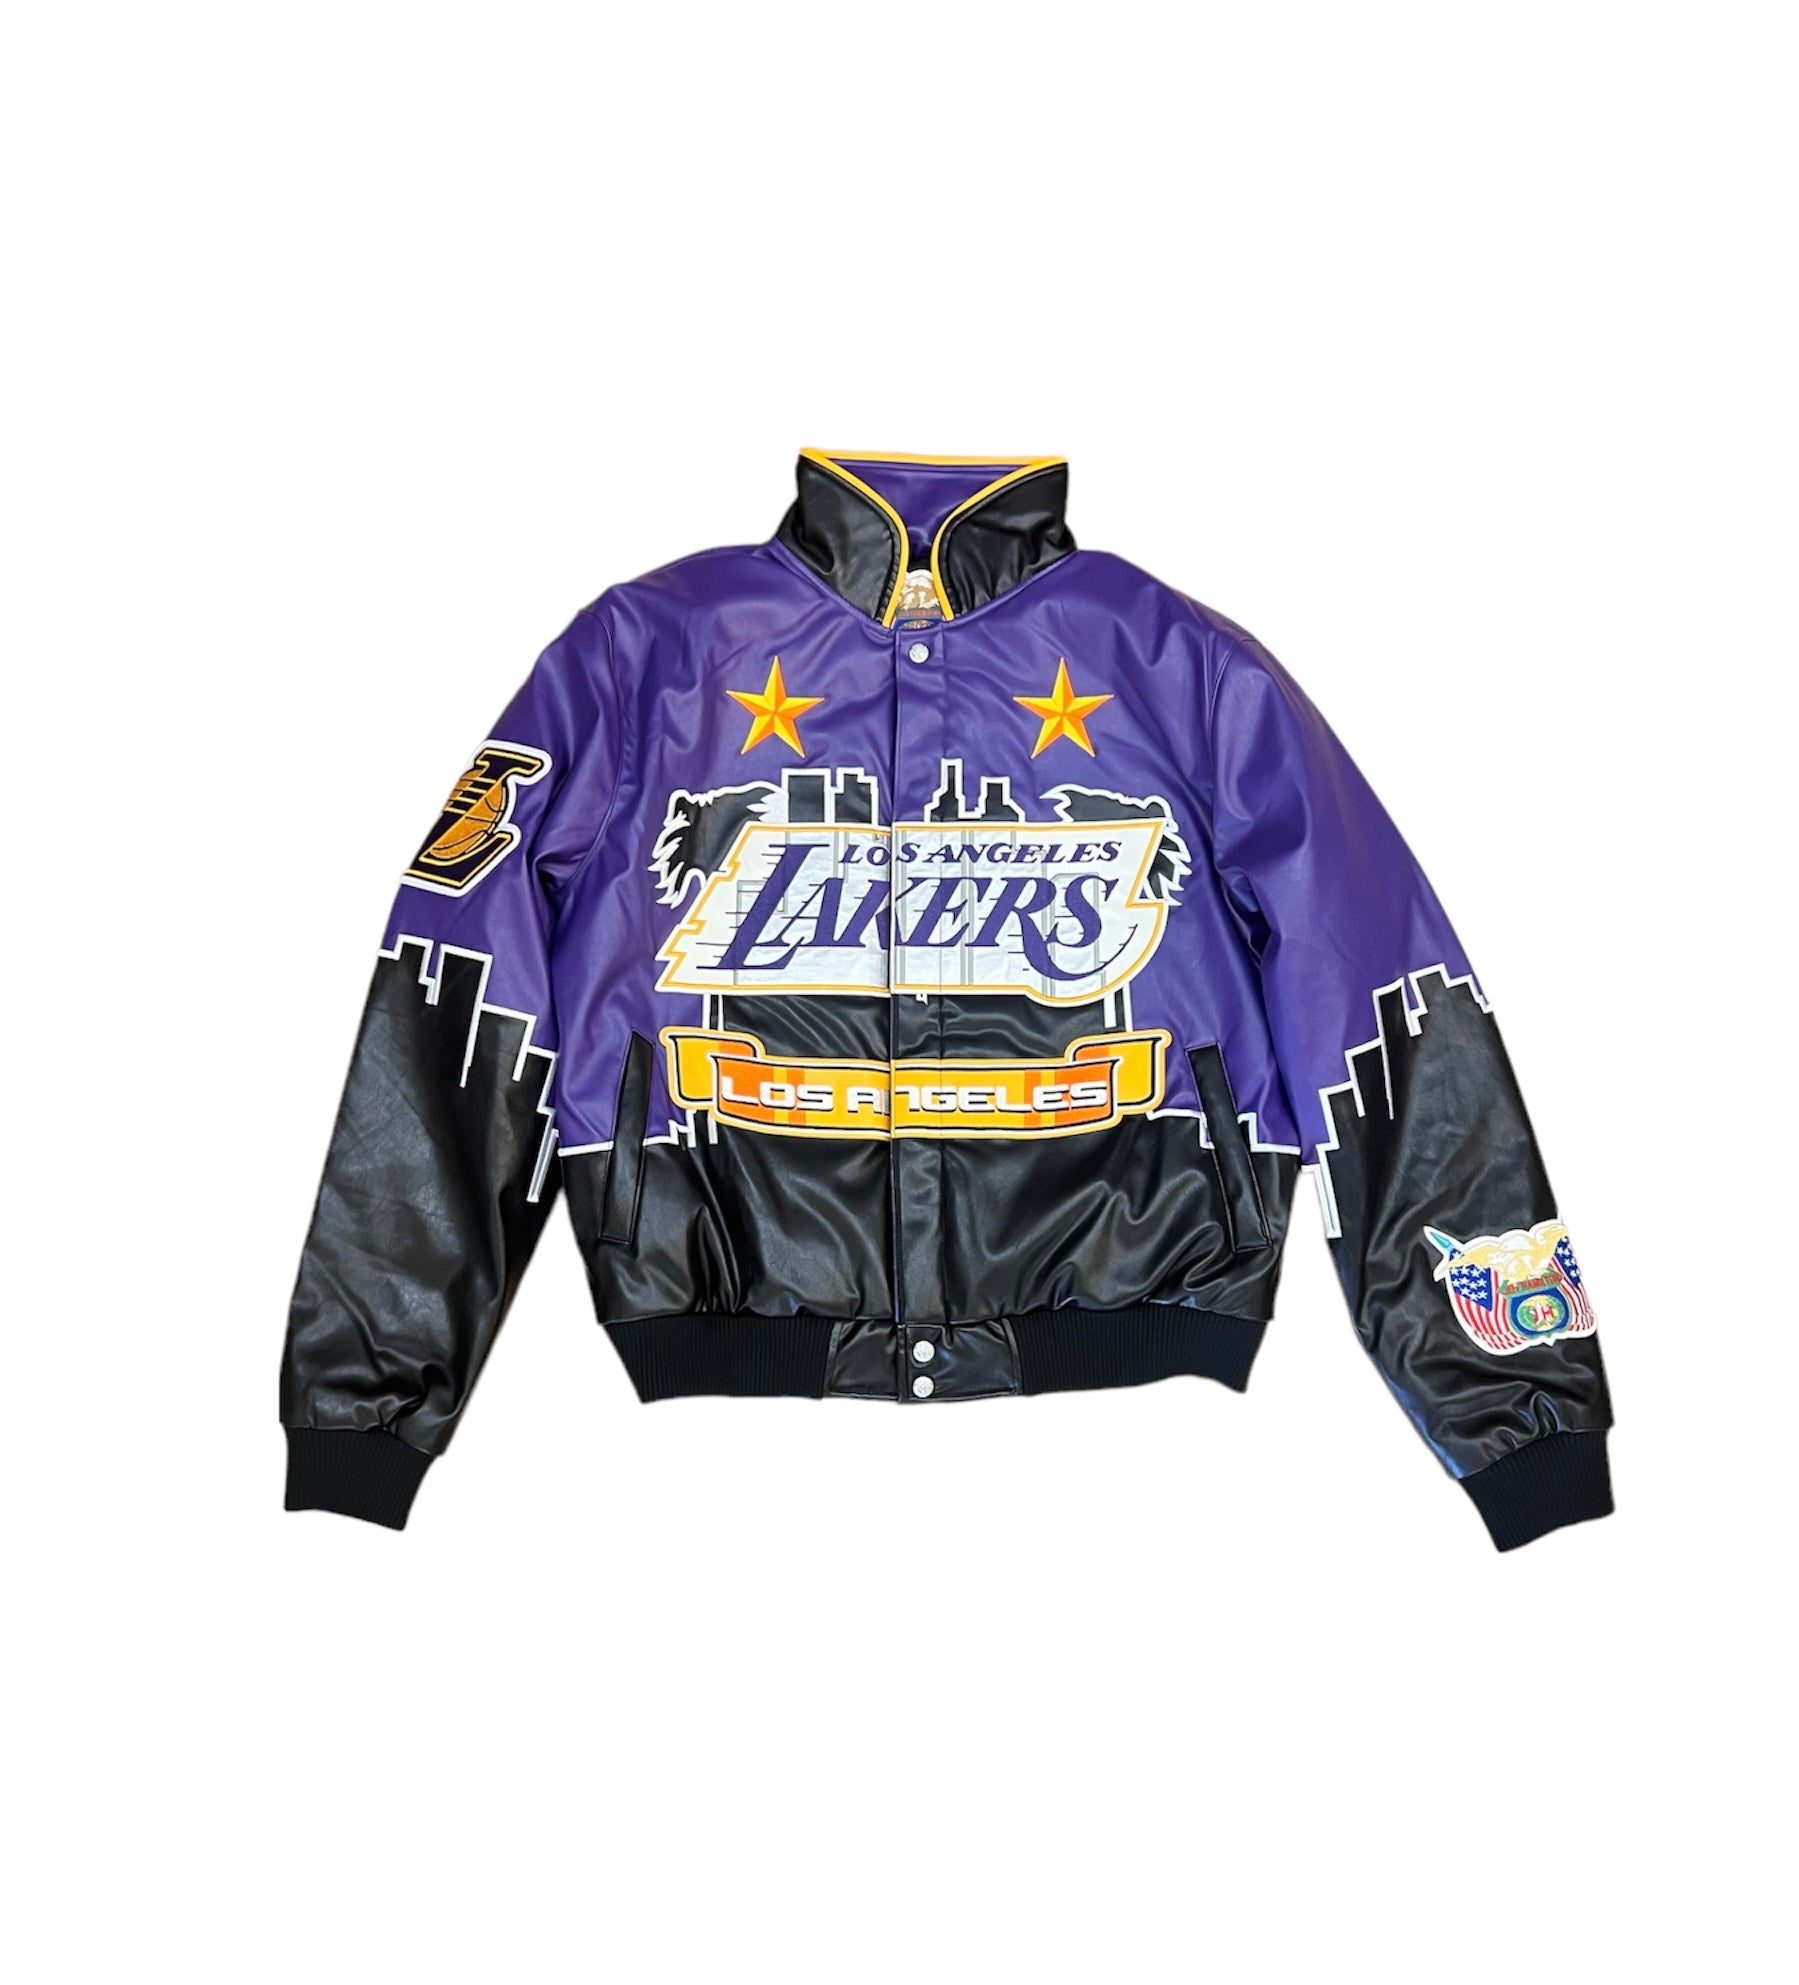 Jeff Hamilton Lakers Championship Jacket